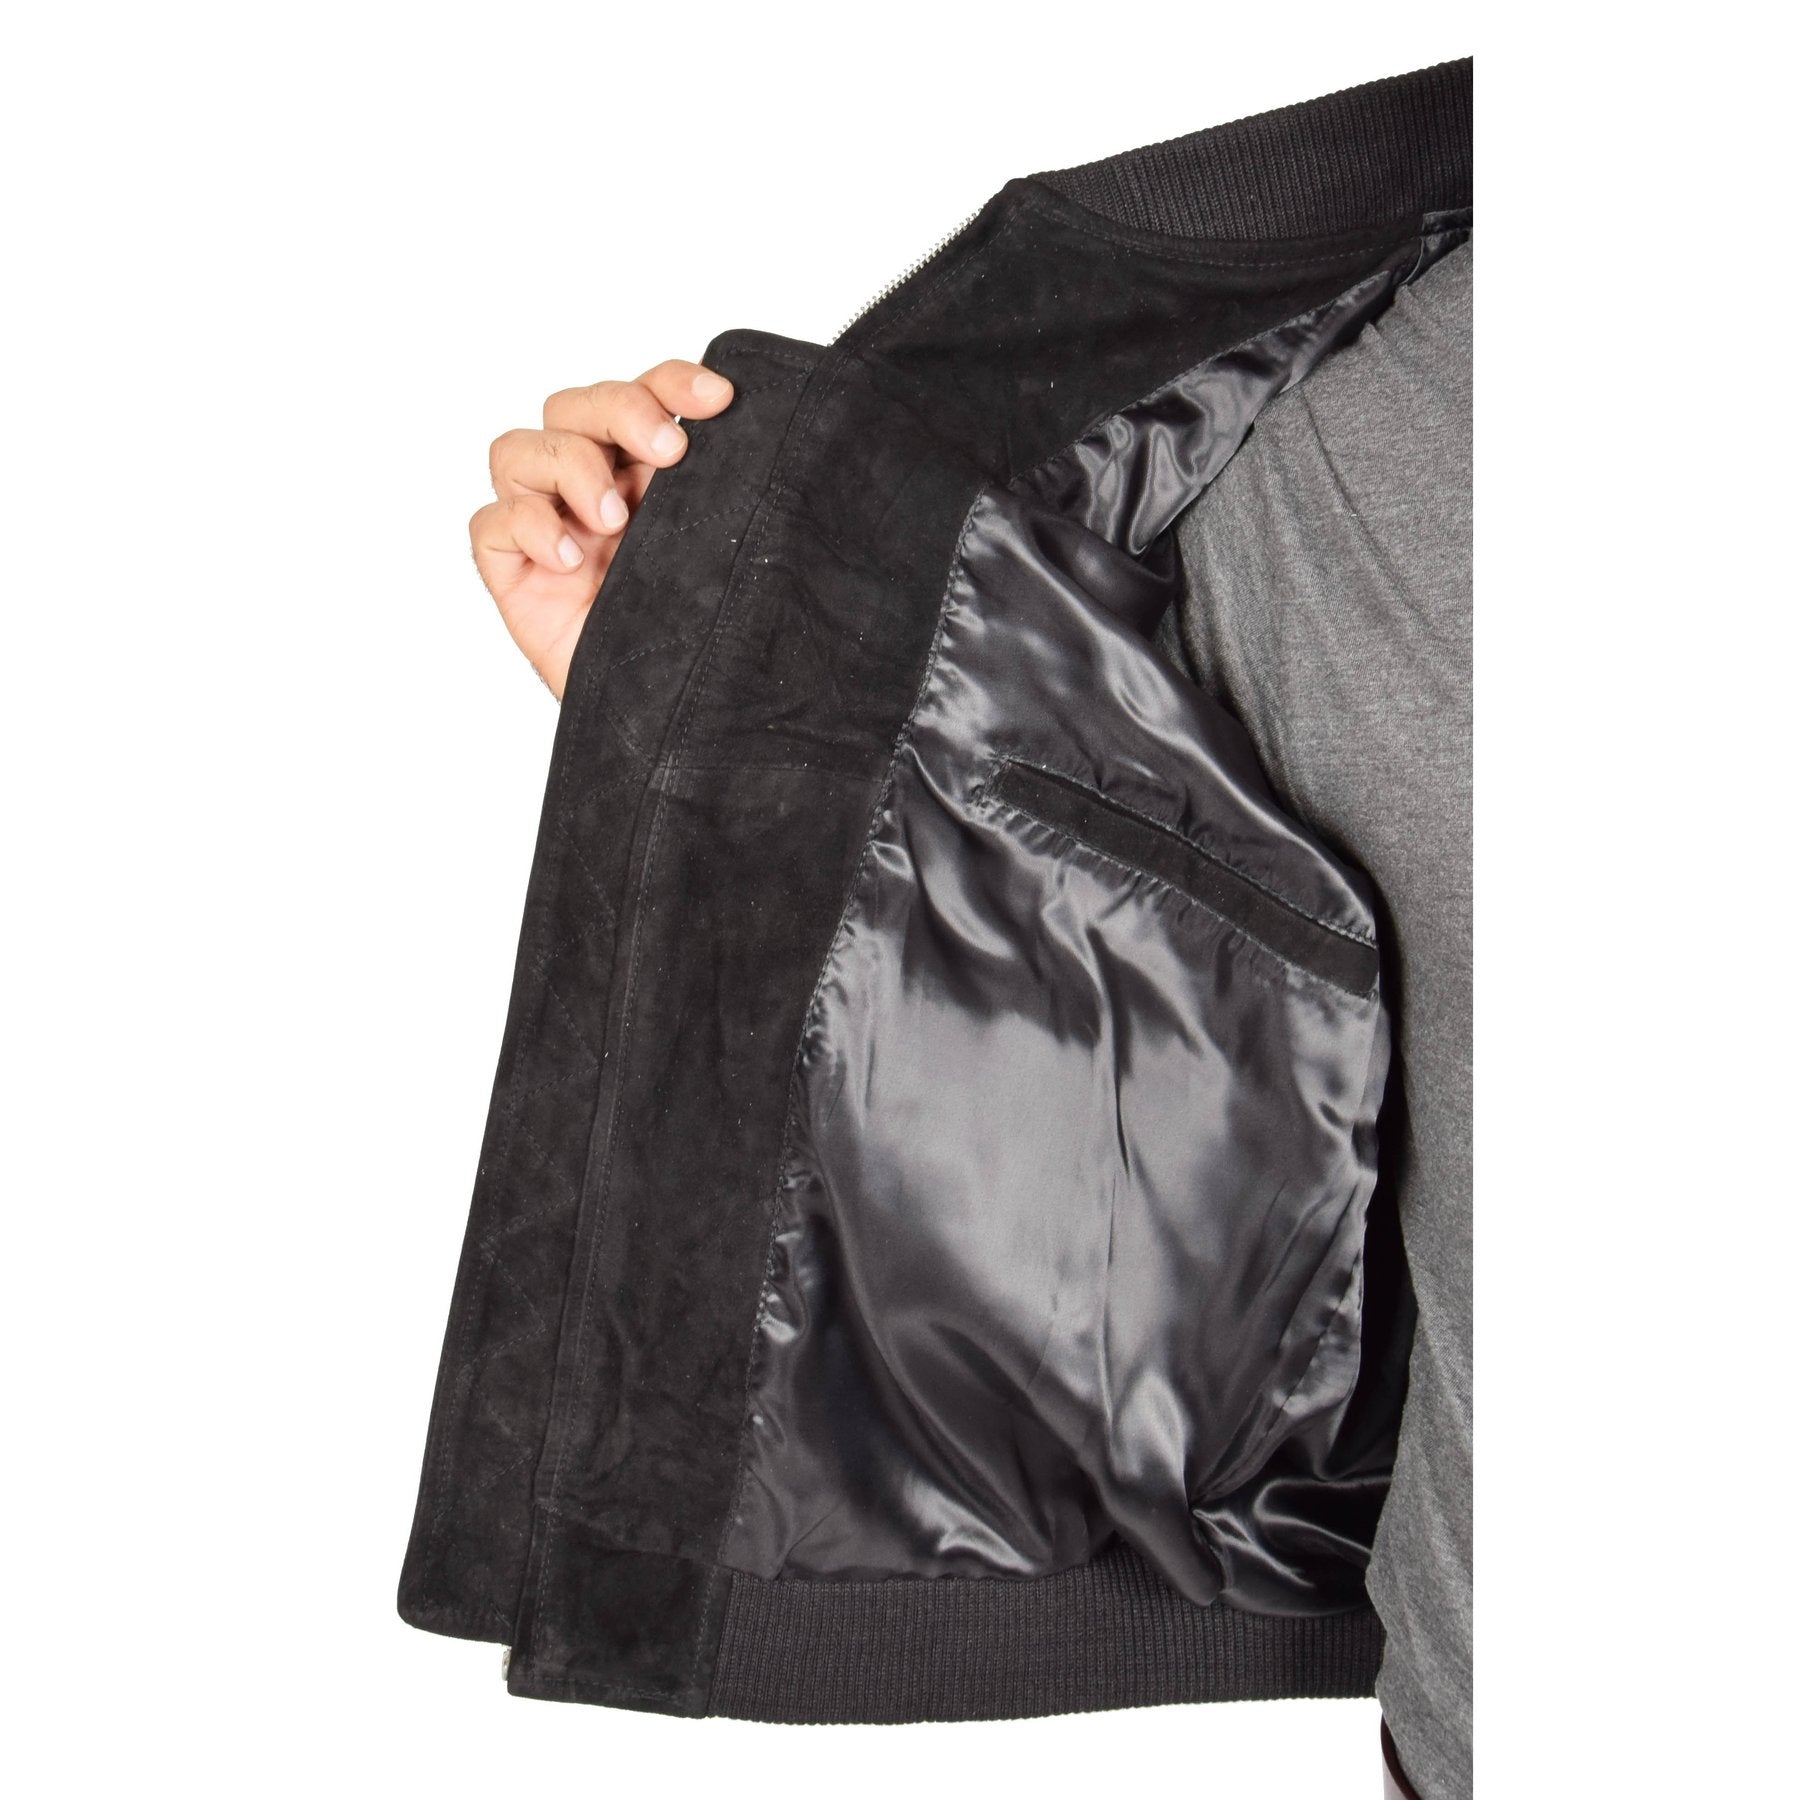 Spine Spark Black Soft Suede Leather Bomber Style Jacket